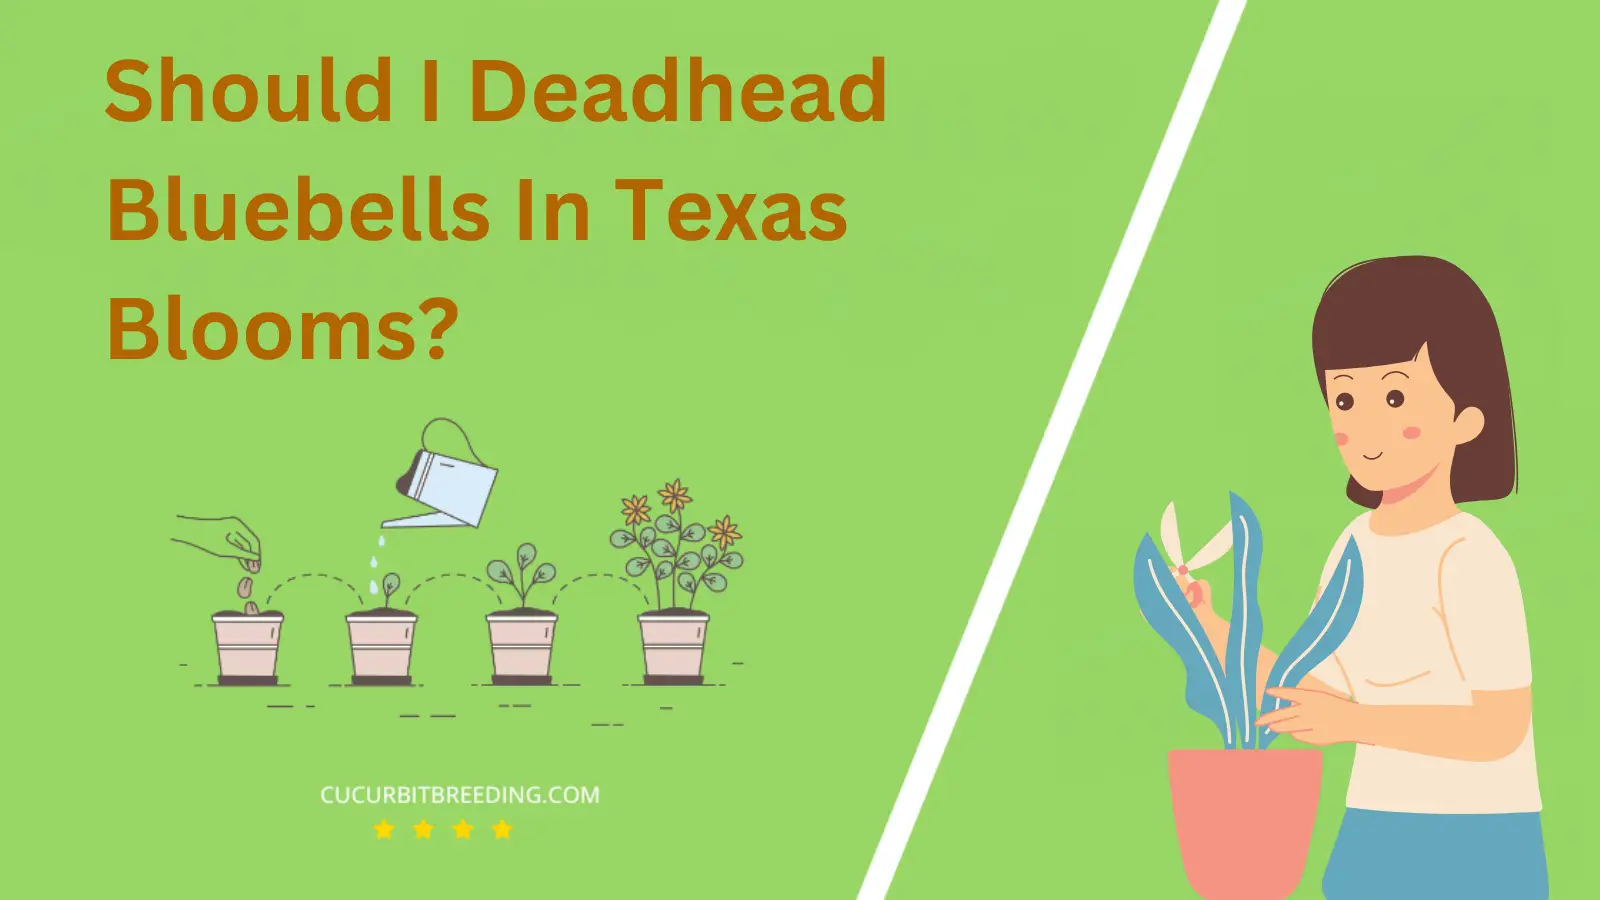 Should I Deadhead Bluebells In Texas Blooms?